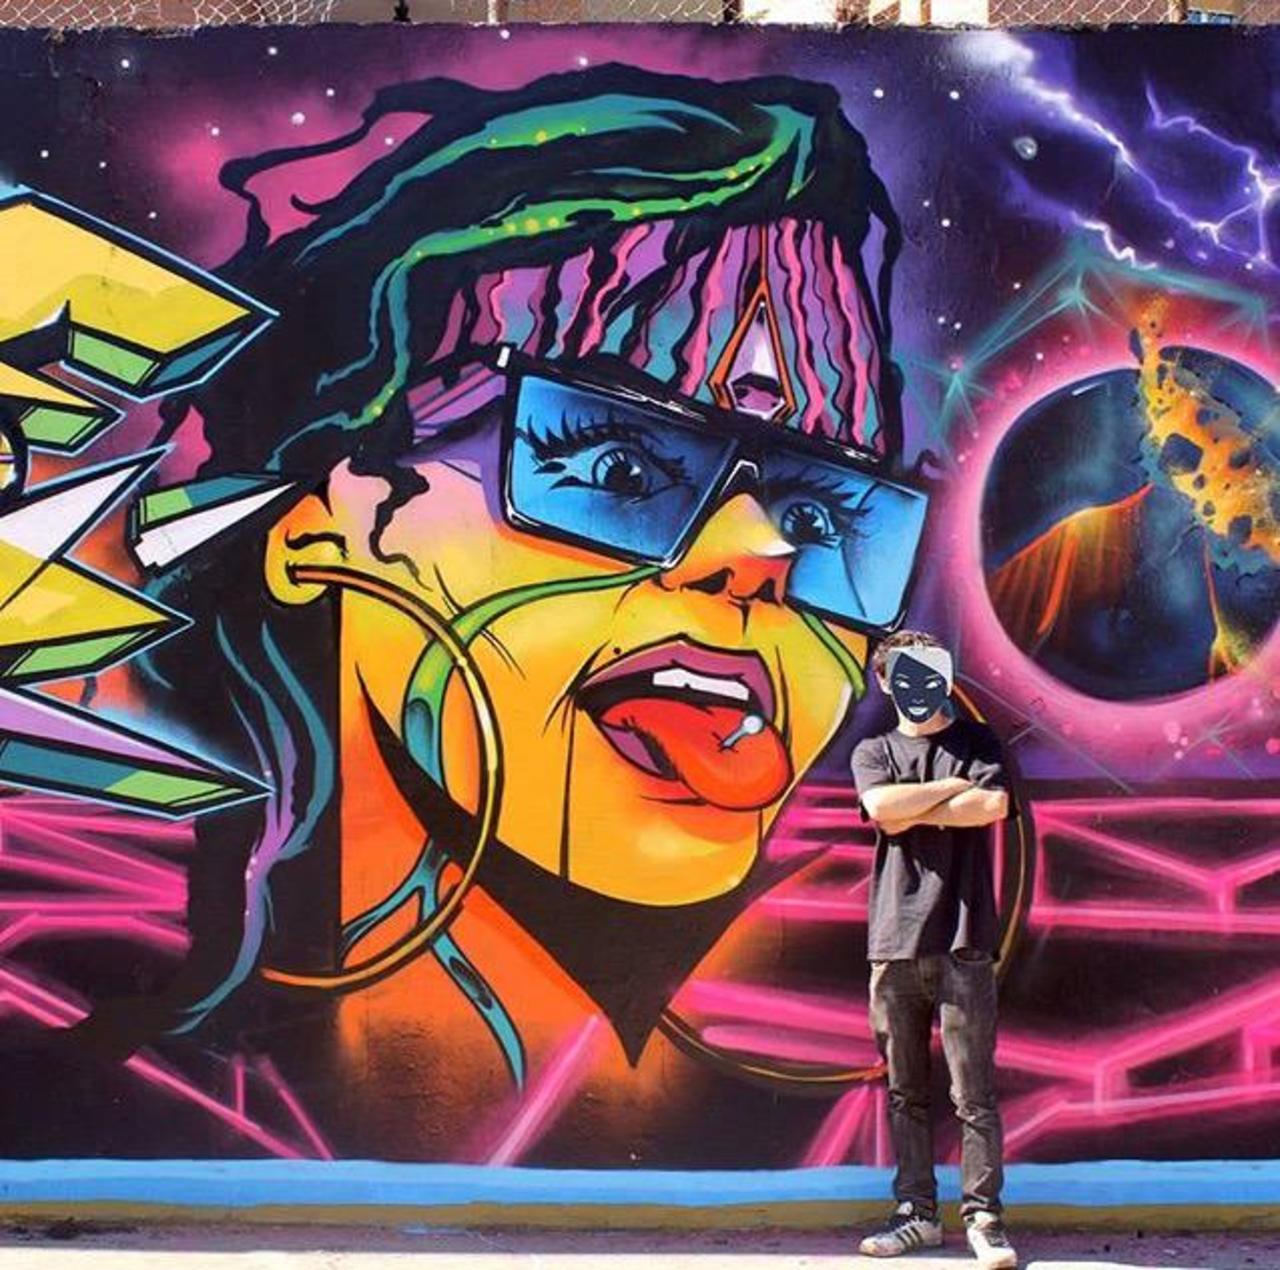 Brilliant new Street Art by the artist Jaycaes

#art #graffiti #mural #streetart http://t.co/zXSS0fUZ7F